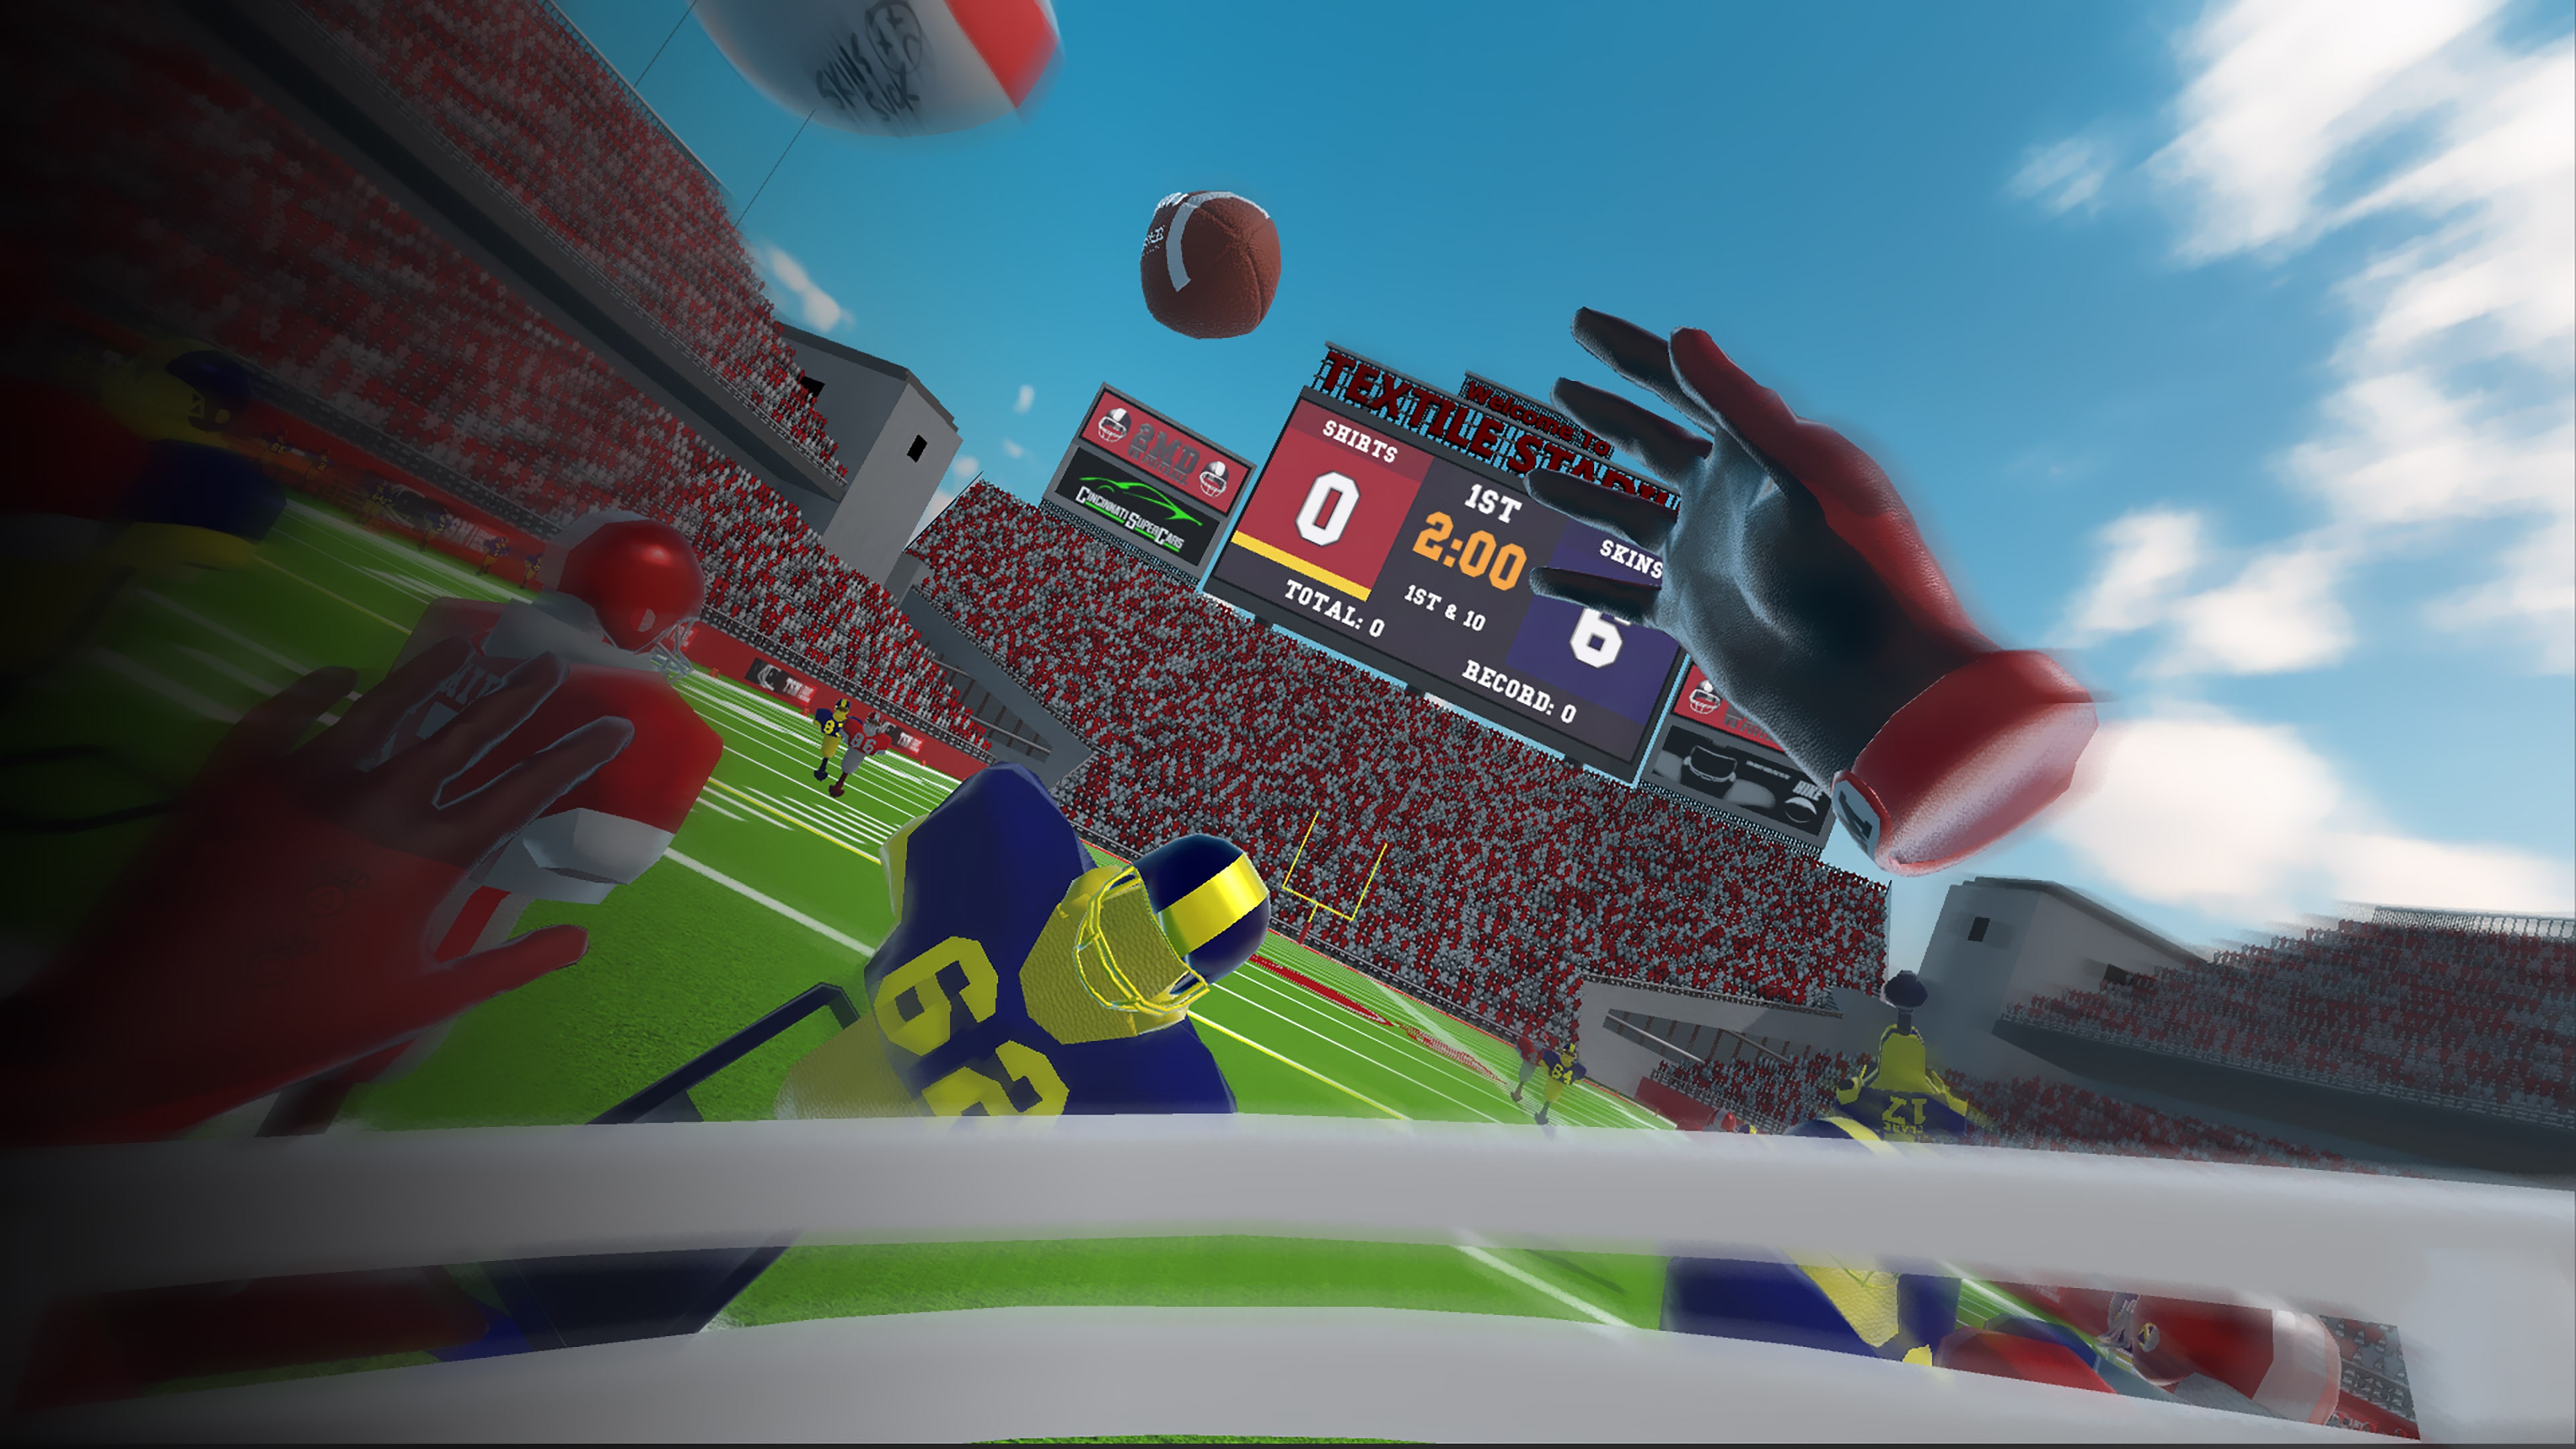 2MD: VR Football™ Head 2 Head Edition